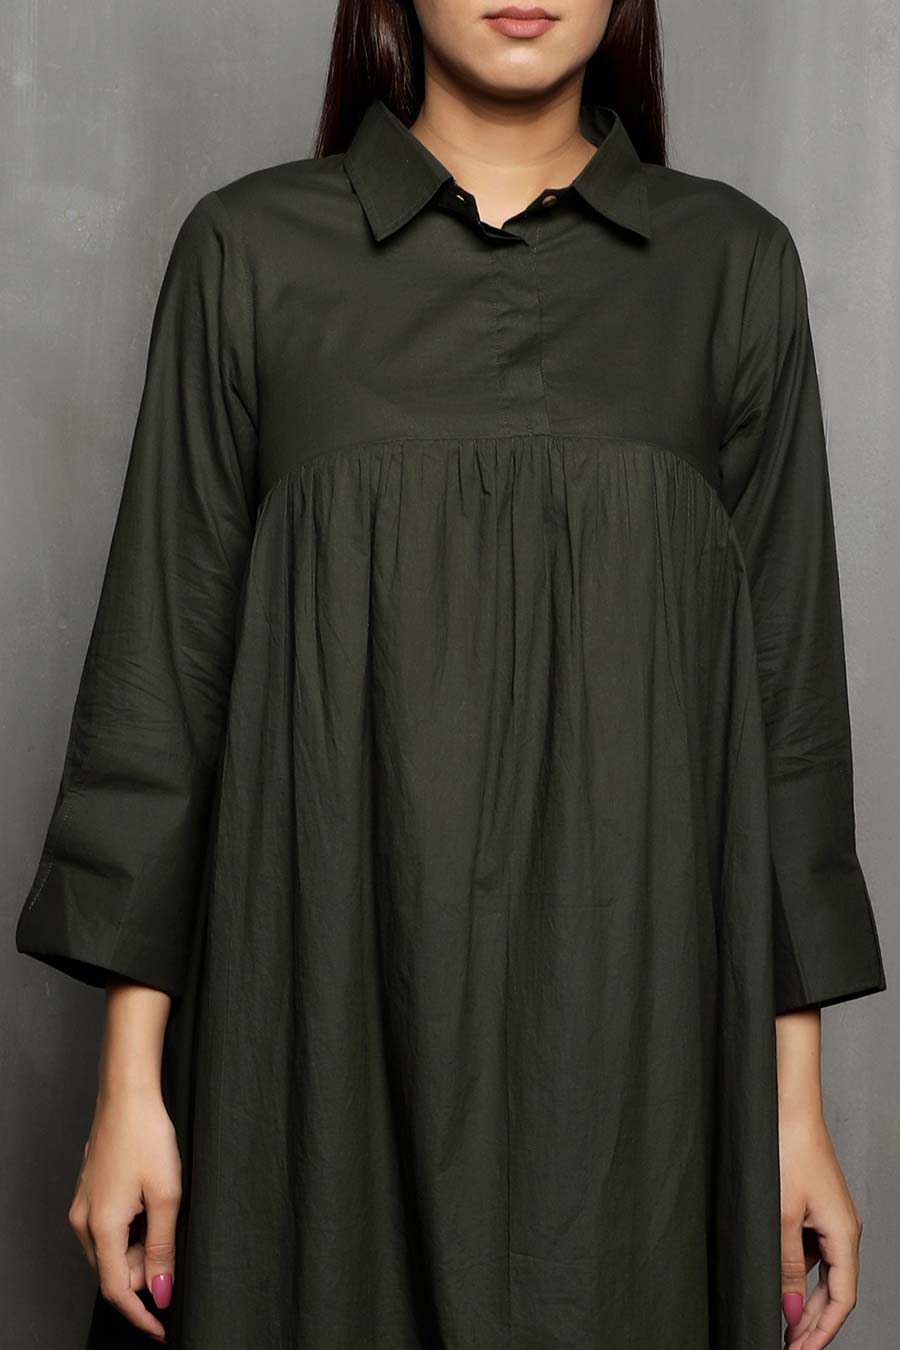 ARYAN - Olive Green Tunic Dress